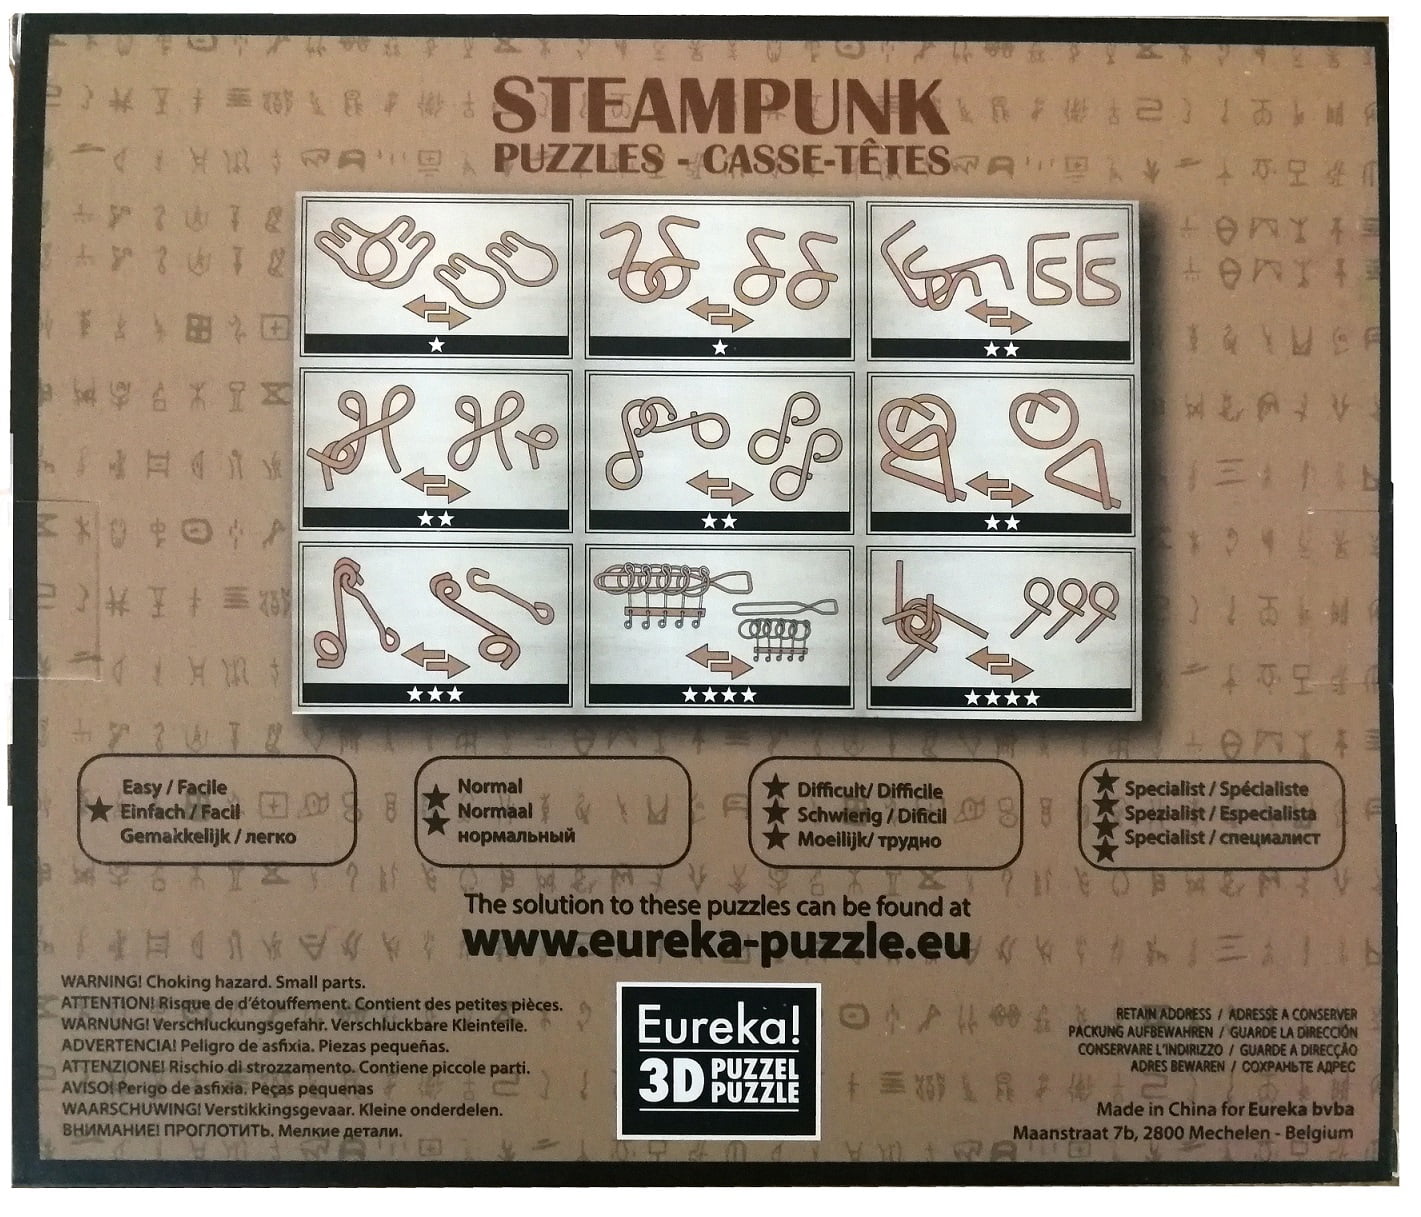 Steampunk Puzzles Set Gray Box - 9 Disentanglement Metal Puzzles 